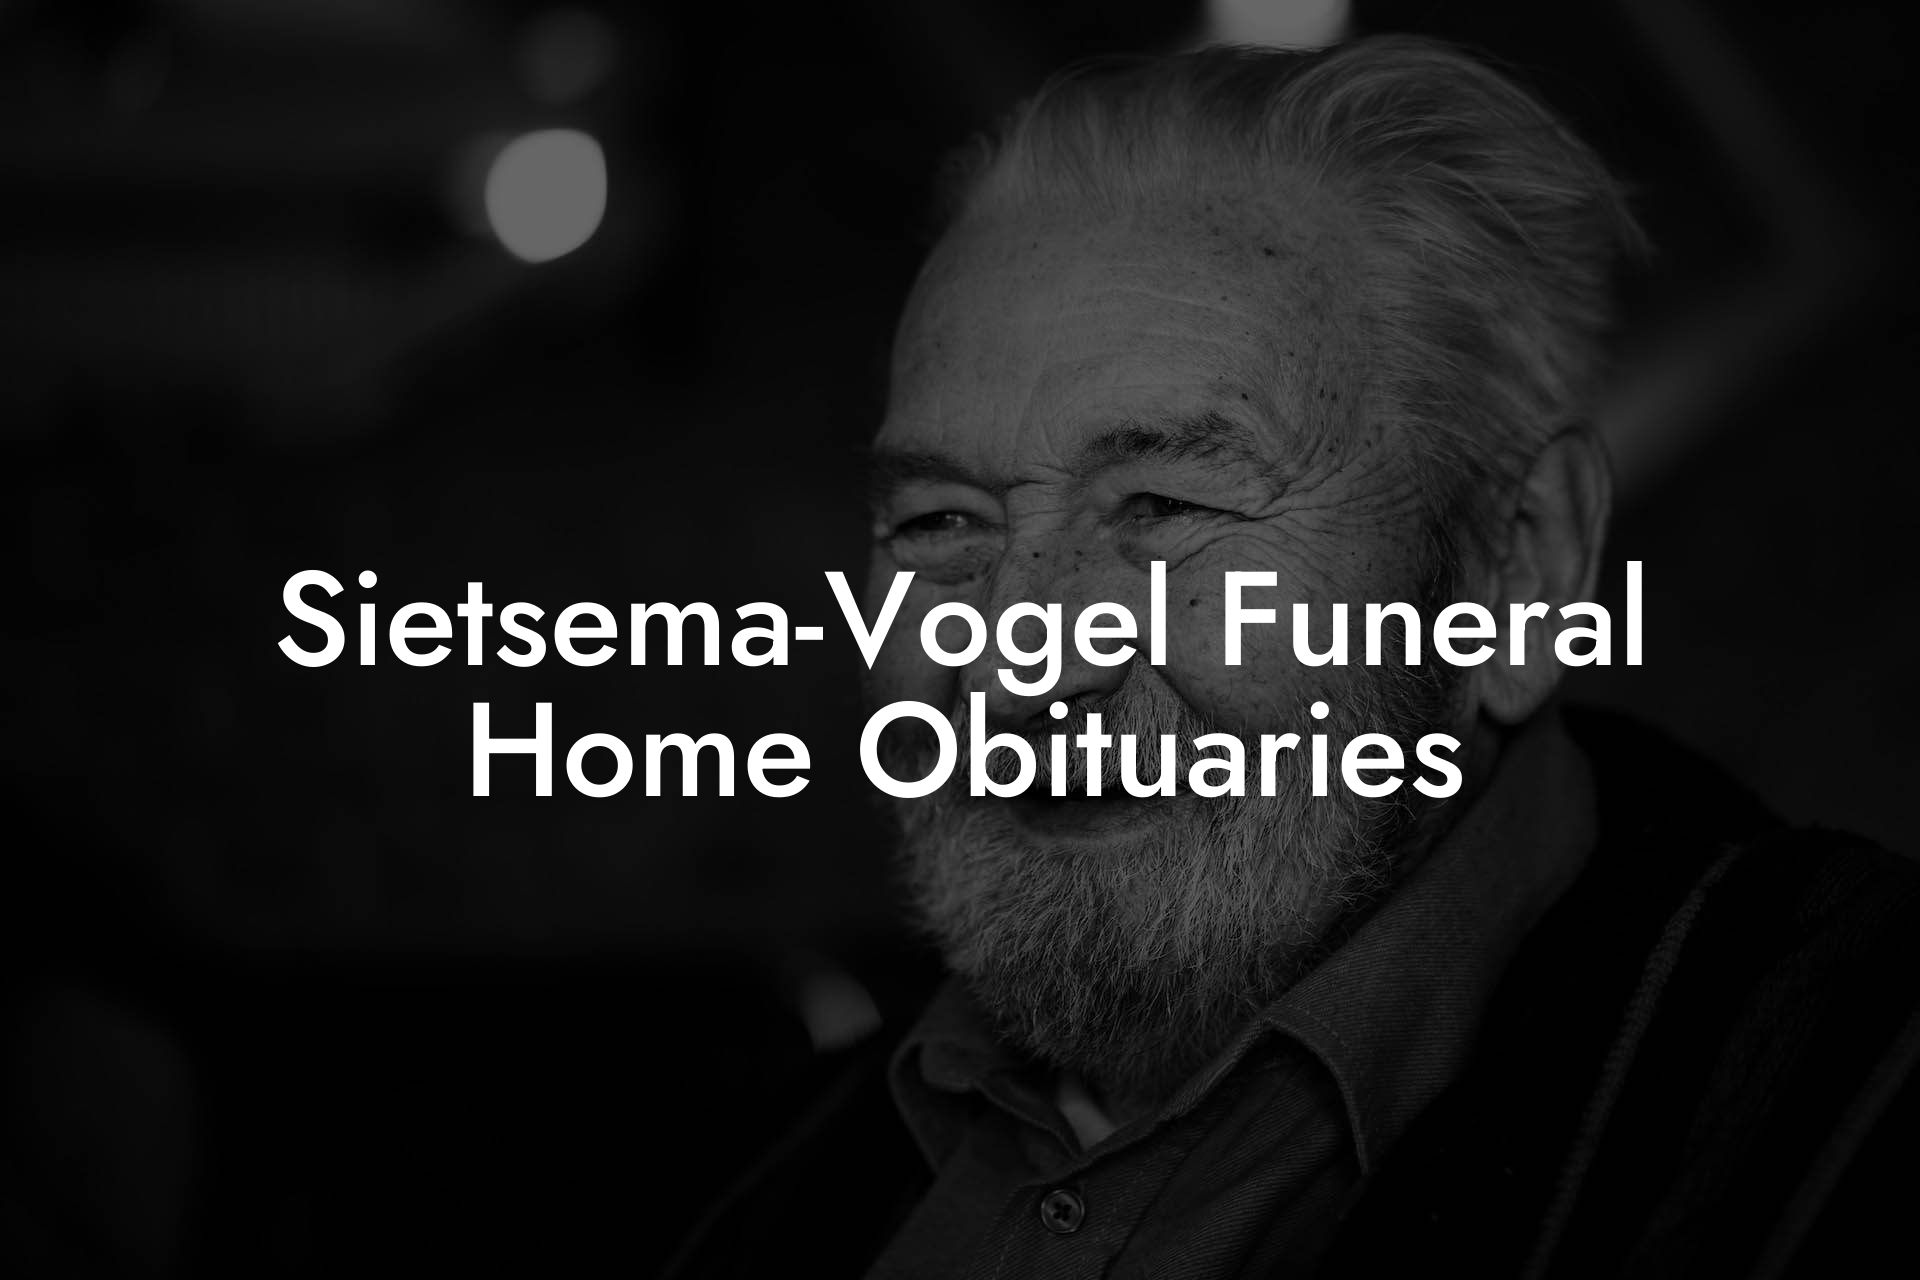 Sietsema-Vogel Funeral Home Obituaries